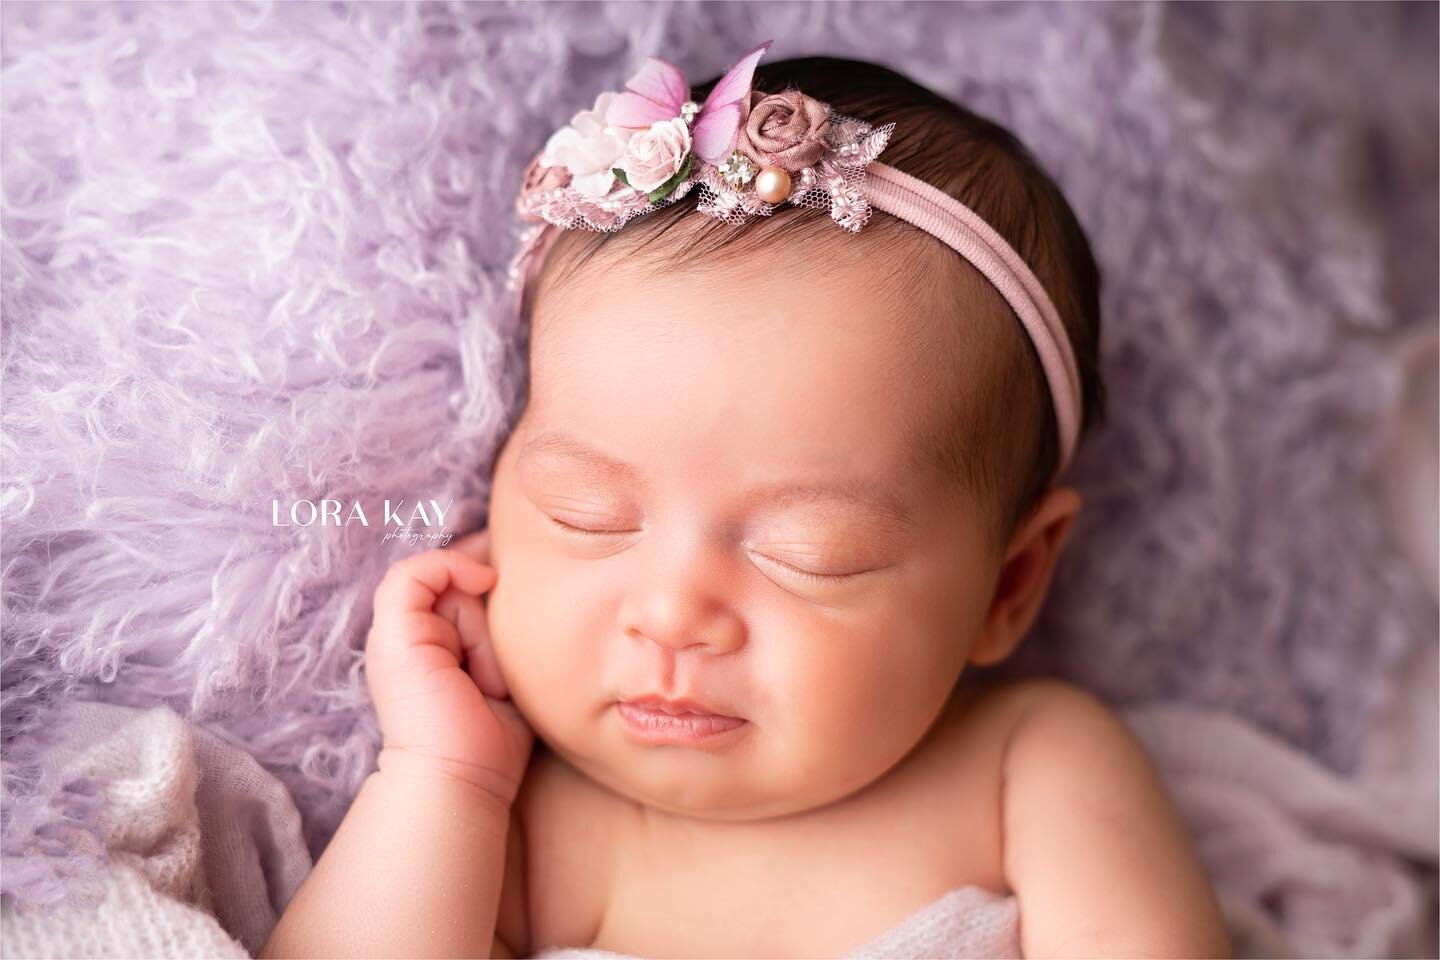 Sweet baby Violet 💜 
#newbornphotography #lorakaynewborn #newbornsession best when baby is 5-15 days old. #explorepage #explore #babyfever #njphotographer #flphotographer  #newbornbaby #violet #newbornphotographer #newborn